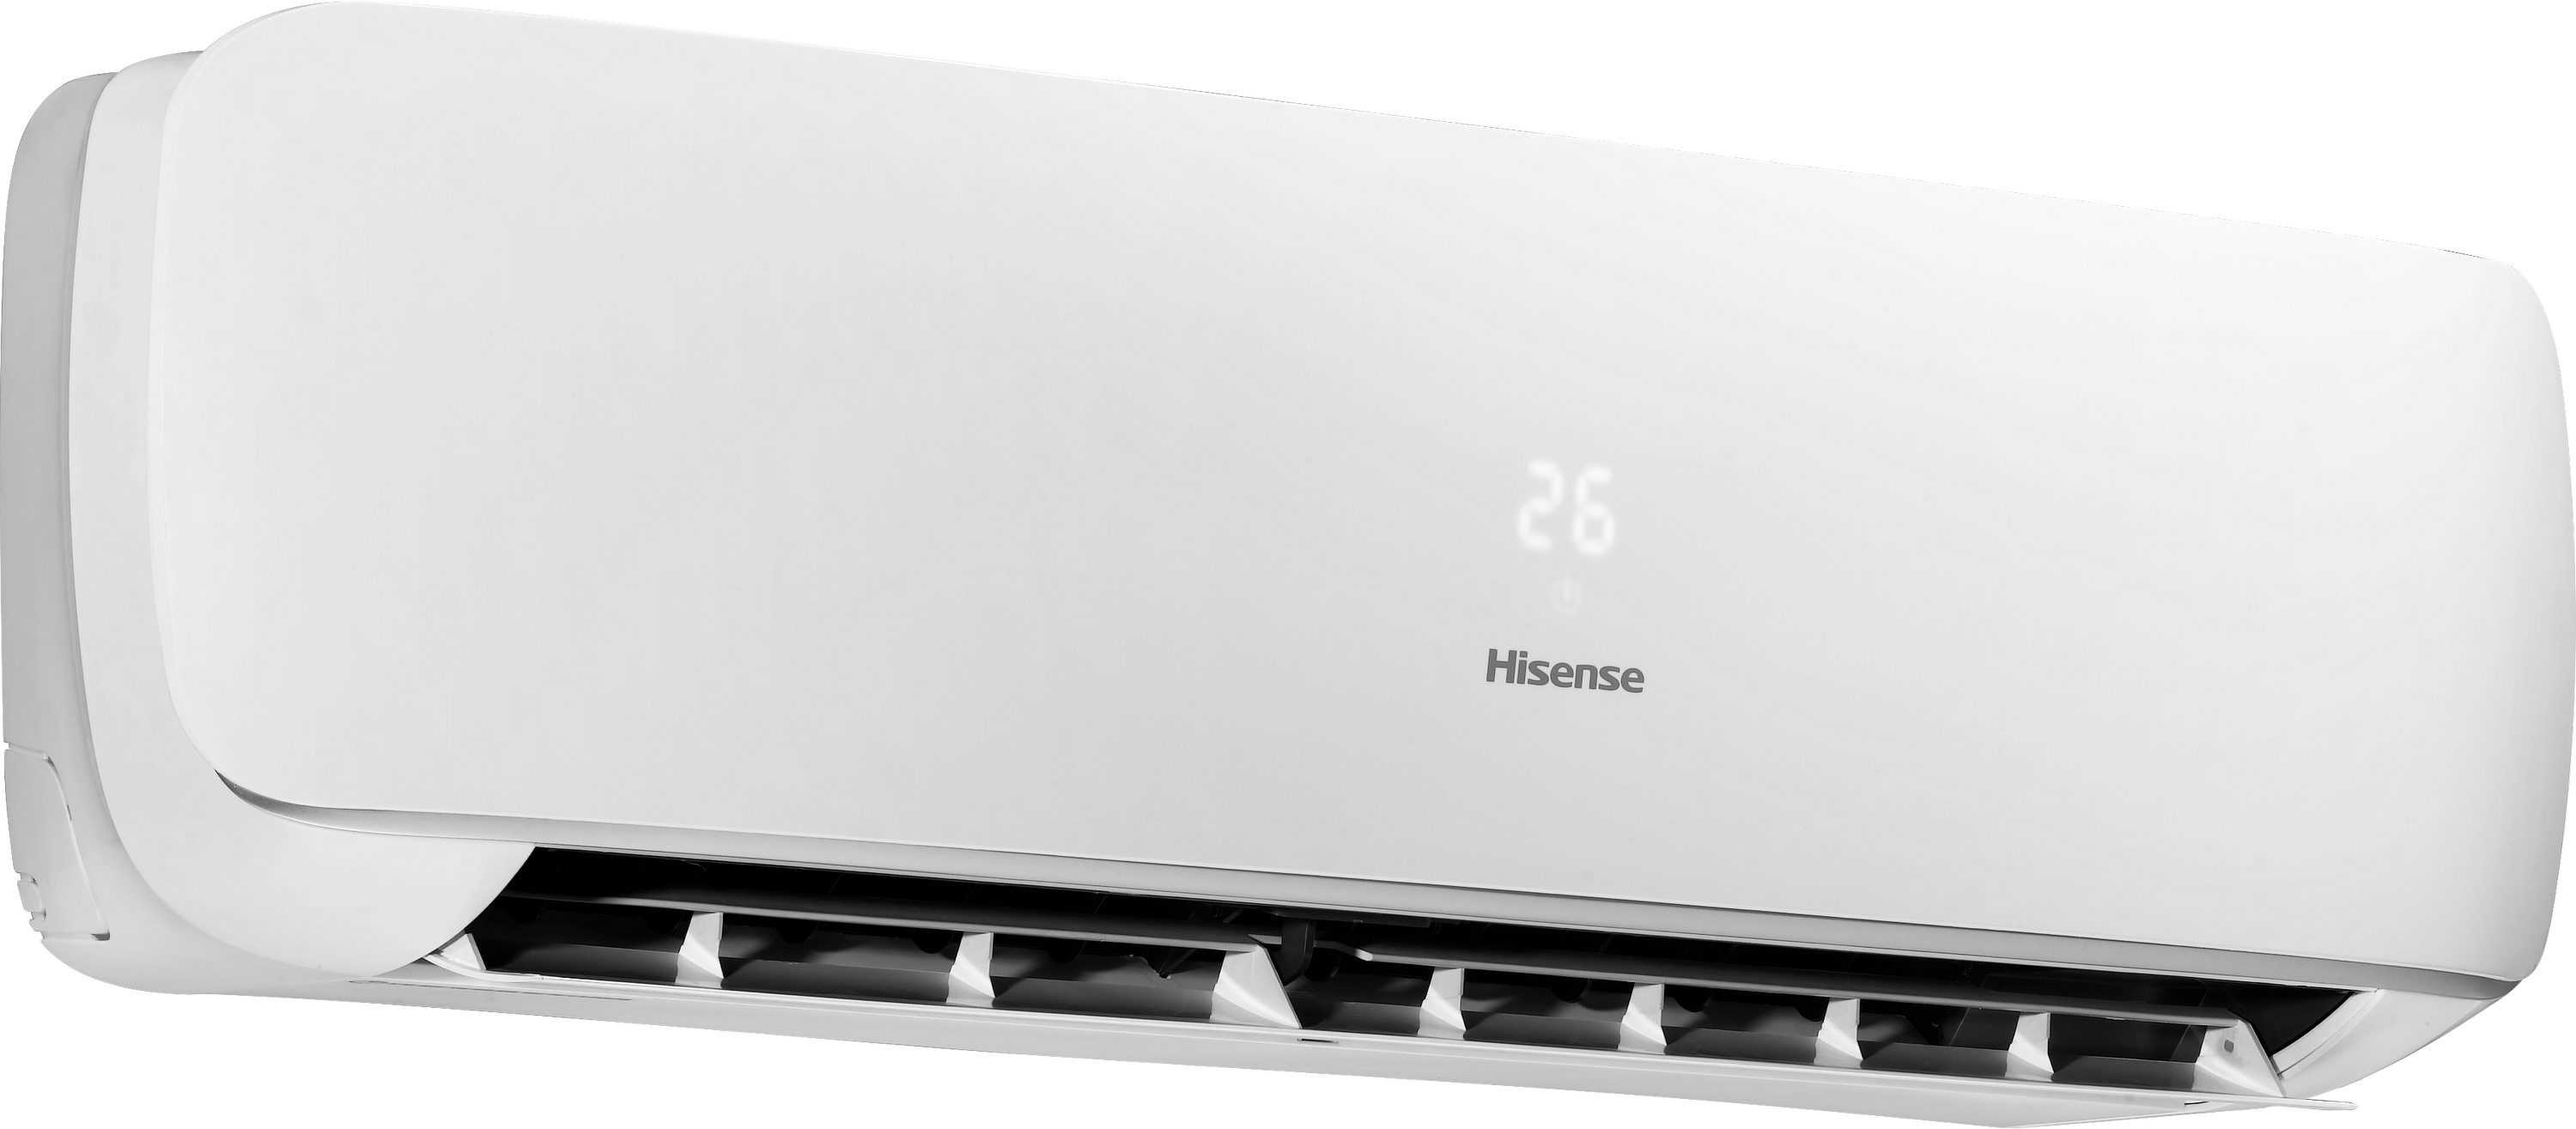 Кондиционер сплит-система Hisense Apple Pie R32 TG25VE0A характеристики - фотография 7